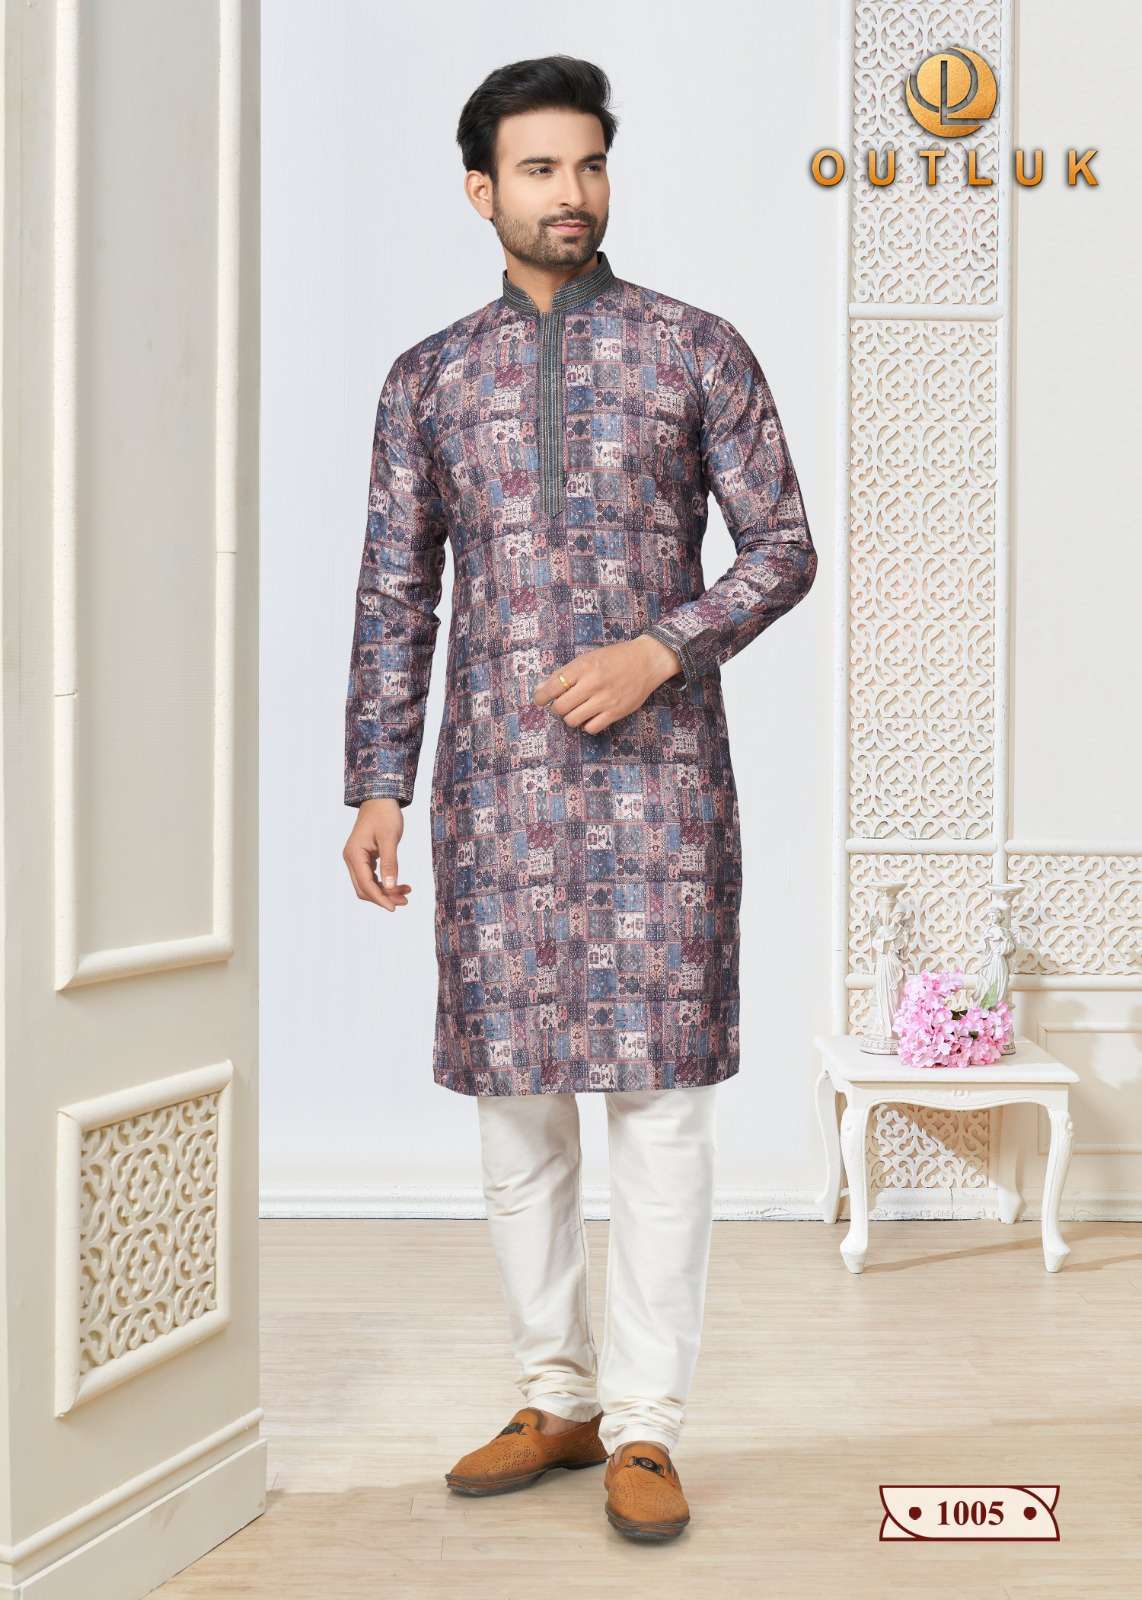 Outluk Wedding Collection 1 Mens Wear Kurta wholesale india